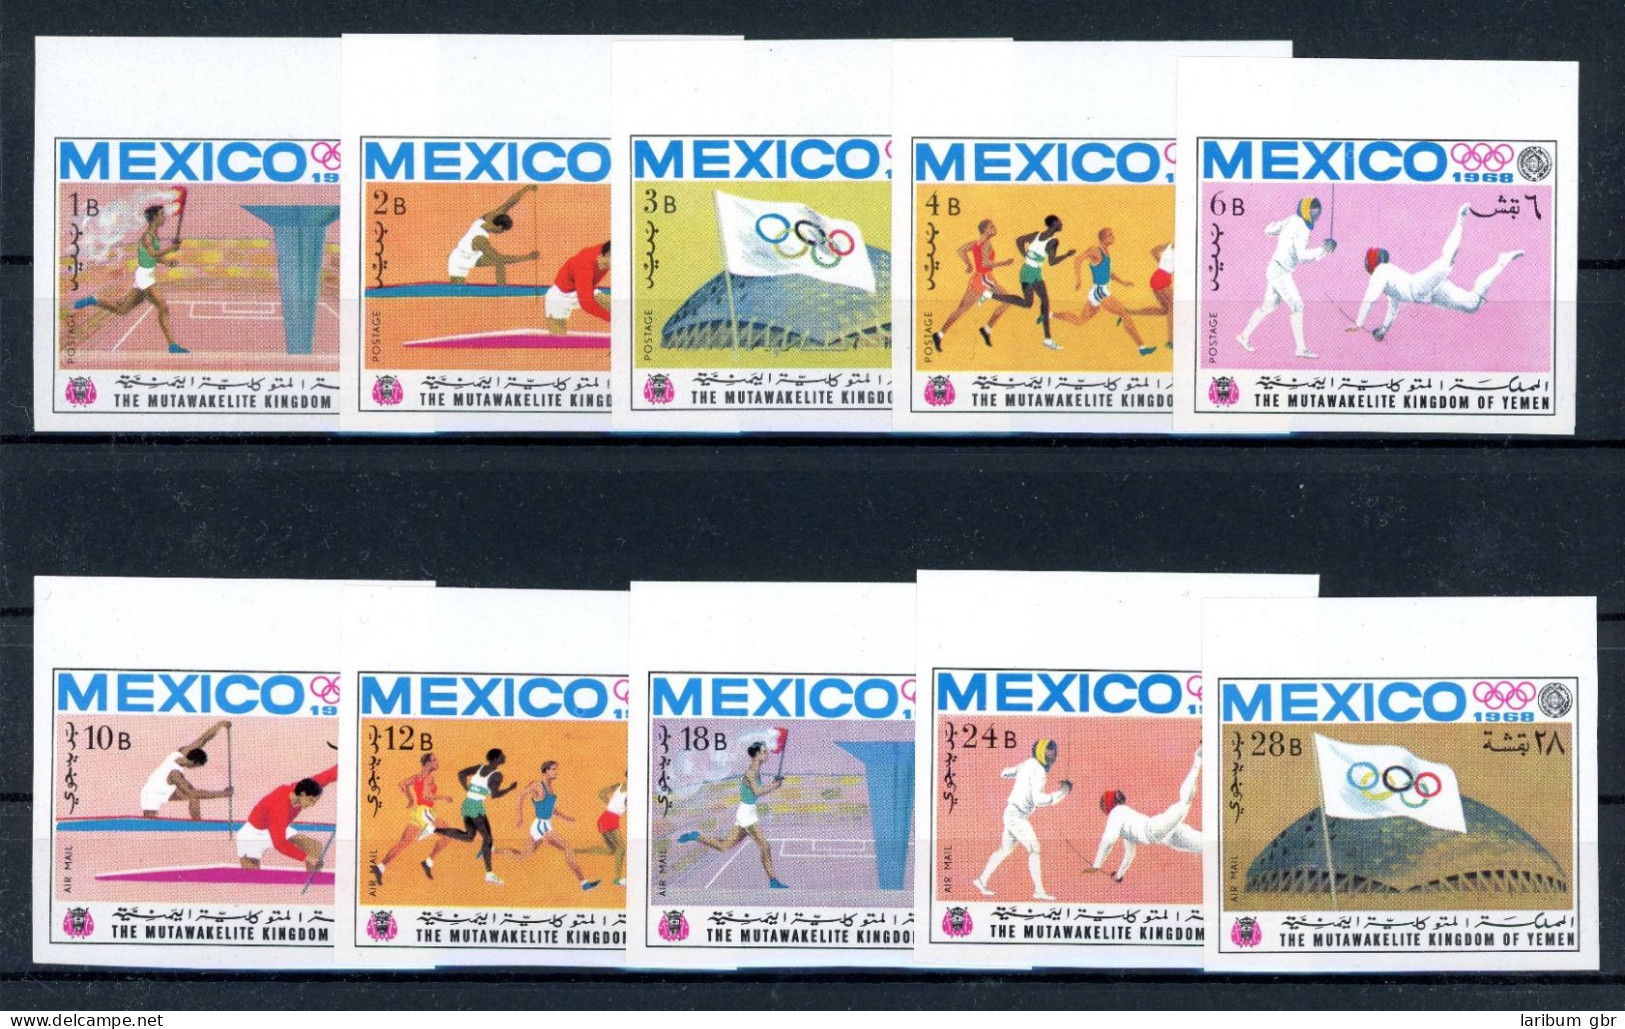 Jemen Königreich 493-502 B Postfrisch Olympiade Mexiko 1968 #JS051 - Yémen